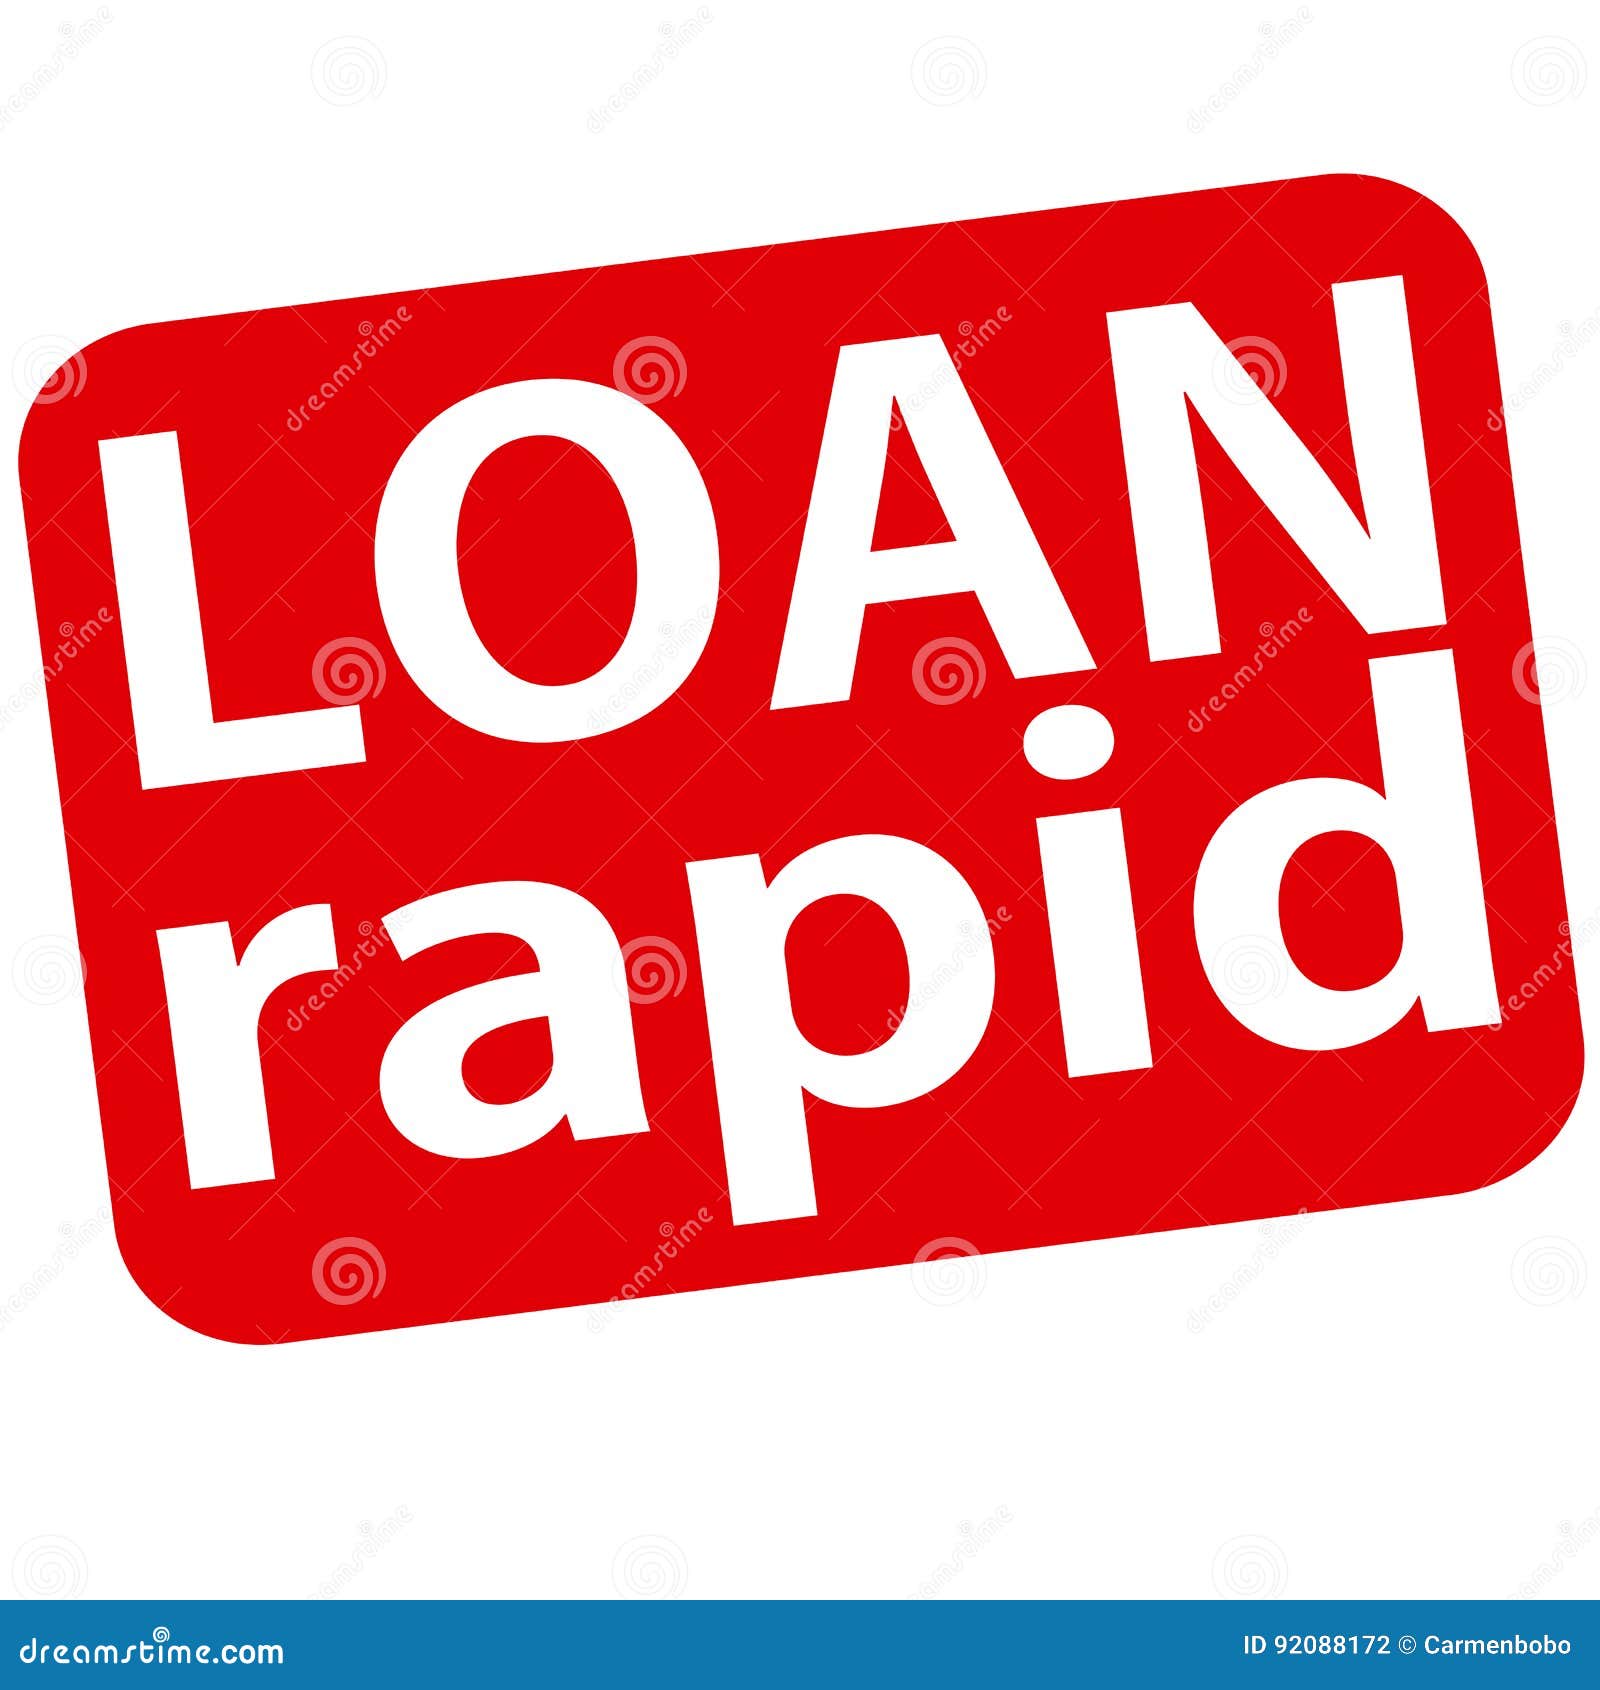 Loan rapid stock illustration. Illustration of hurried 92088172